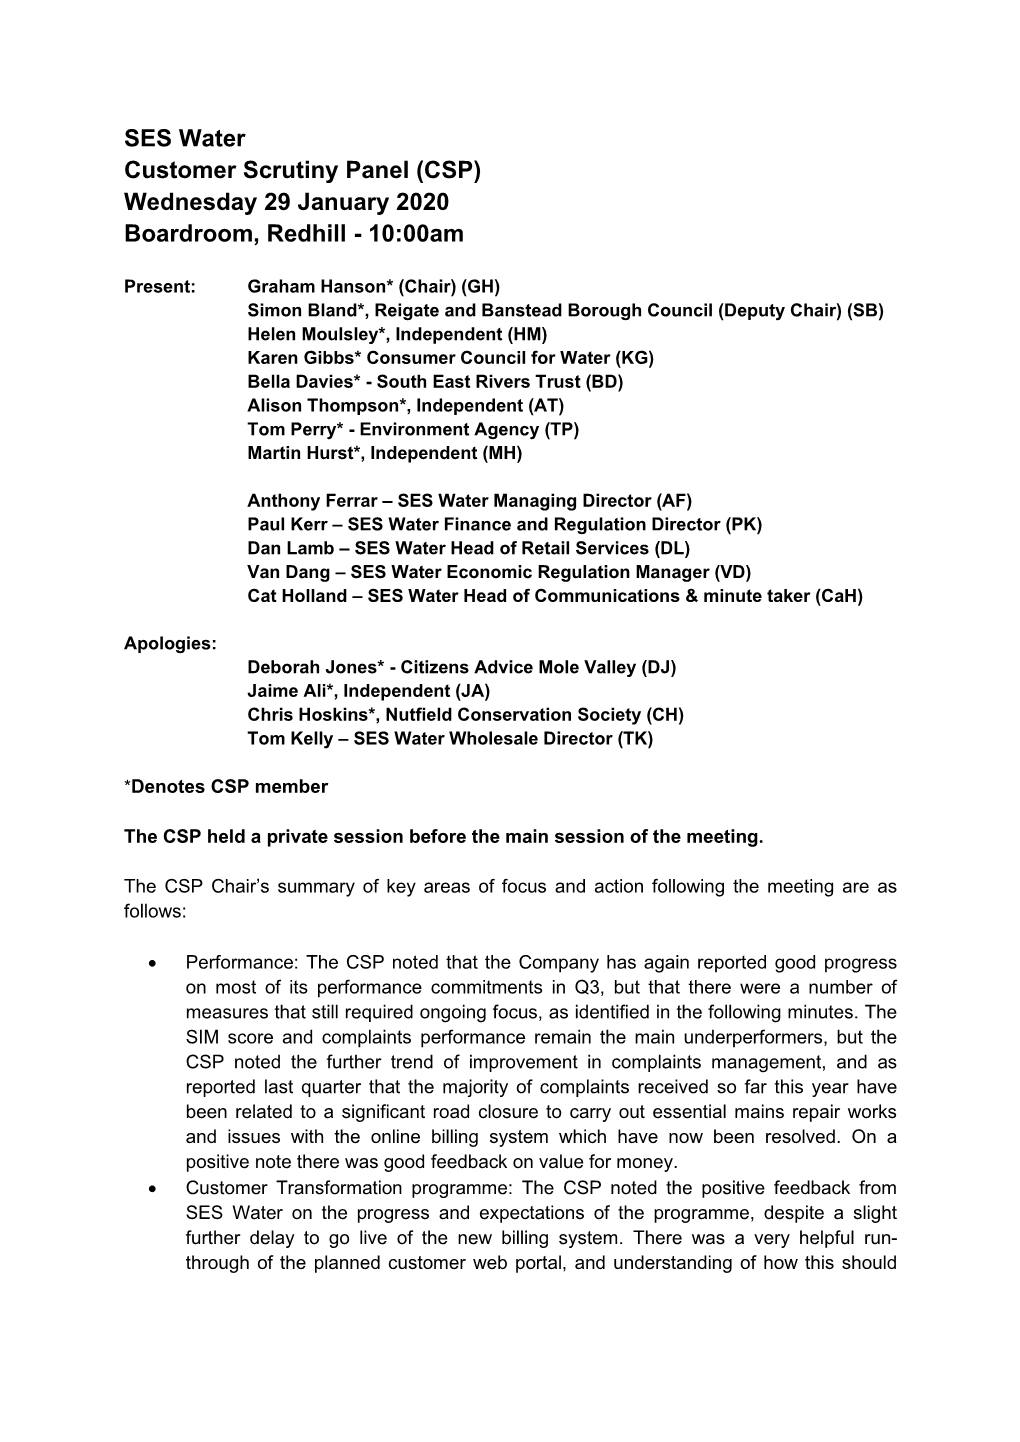 SES Water Customer Scrutiny Panel (CSP) Wednesday 29 January 2020 Boardroom, Redhill - 10:00Am